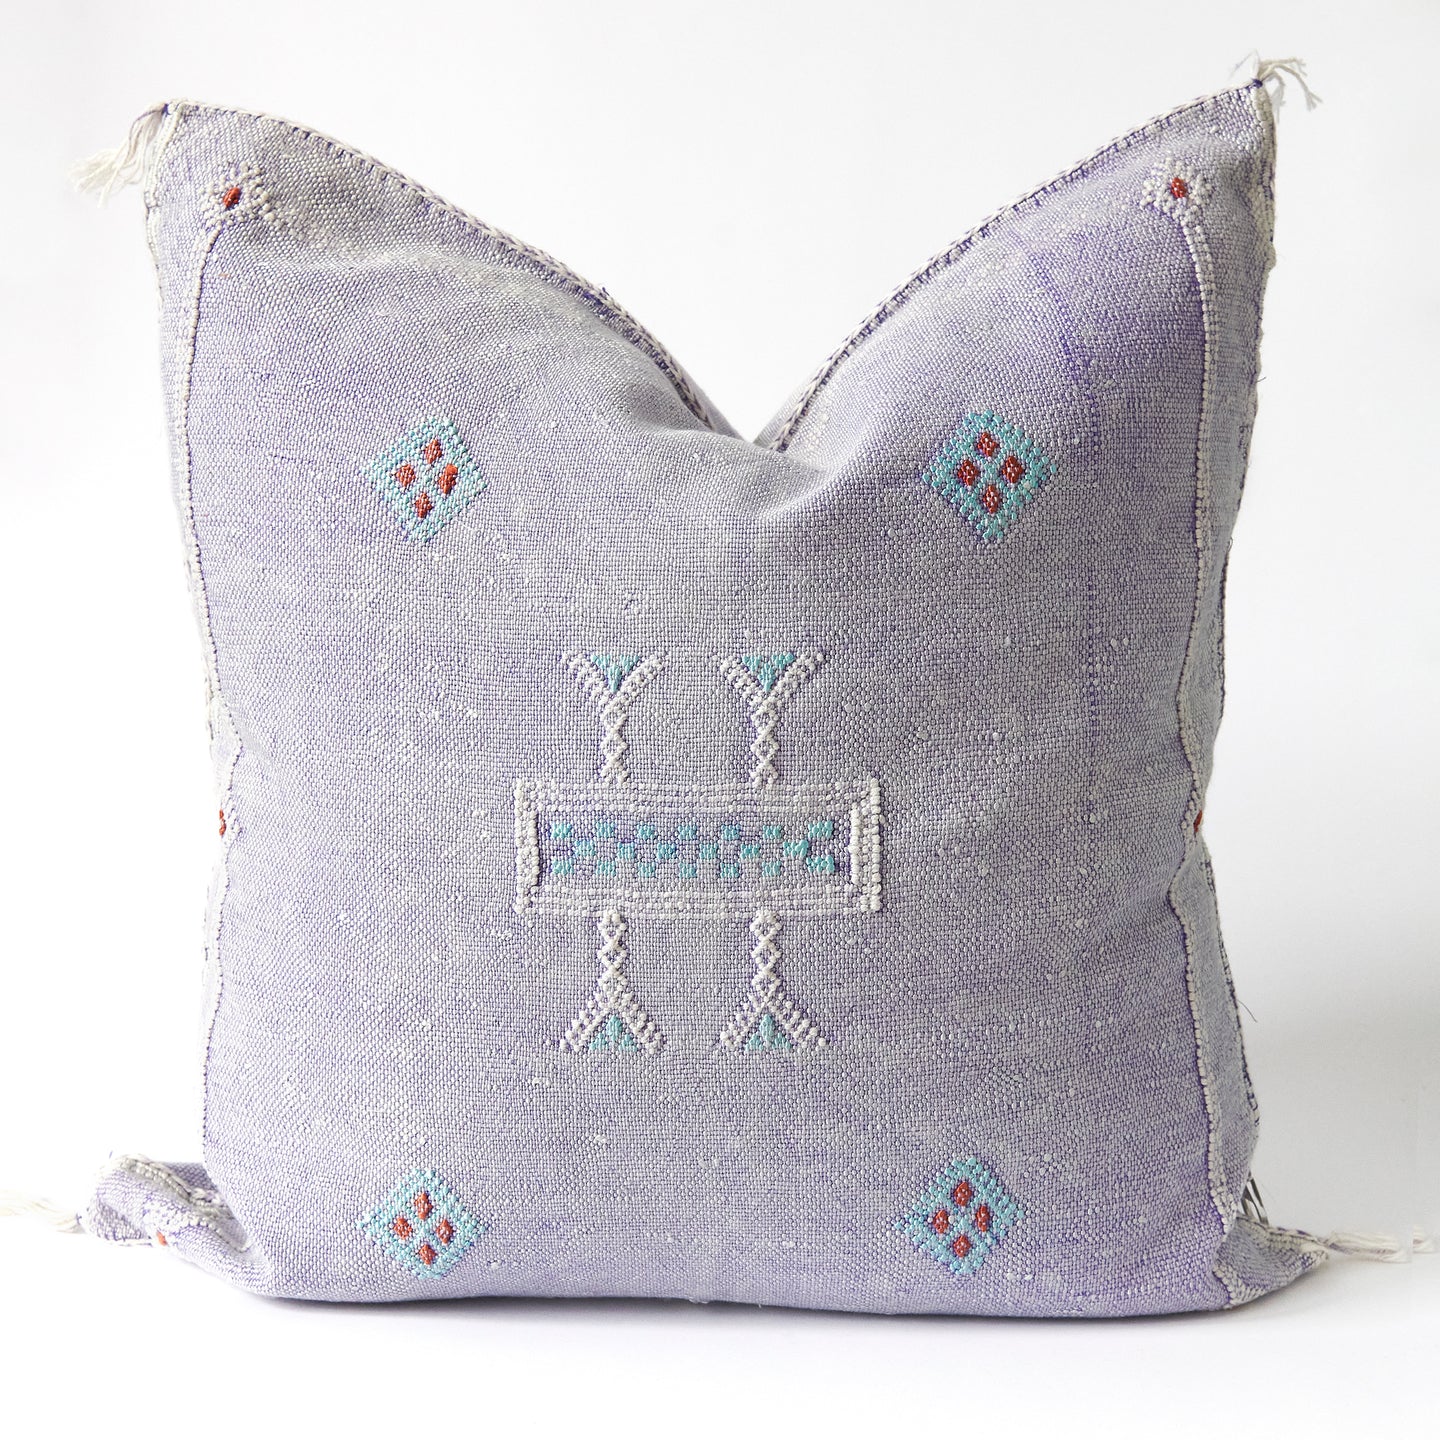 No.120 Sabra Silk Pillow